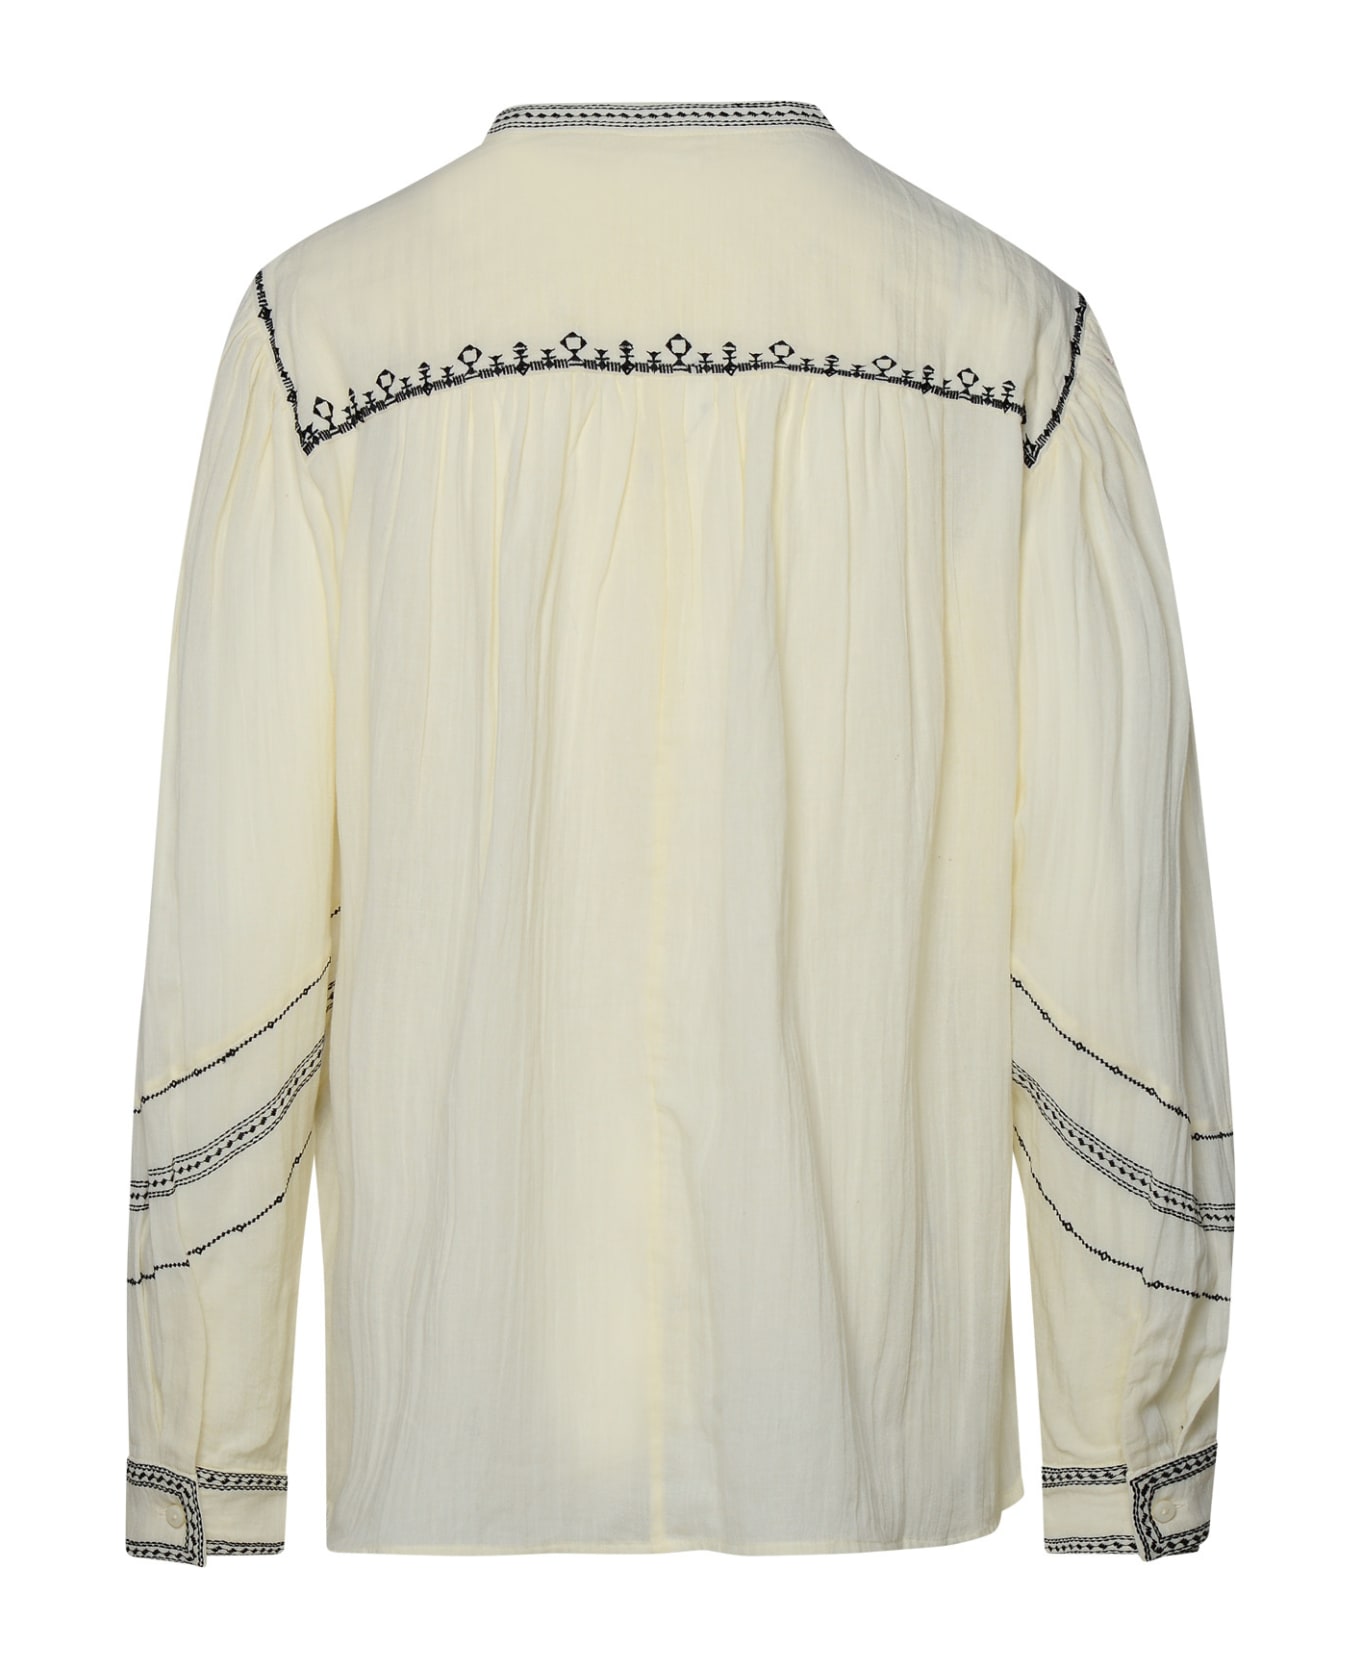 Marant Étoile 'pelson' Ivory Cotton Shirt - White ブラウス